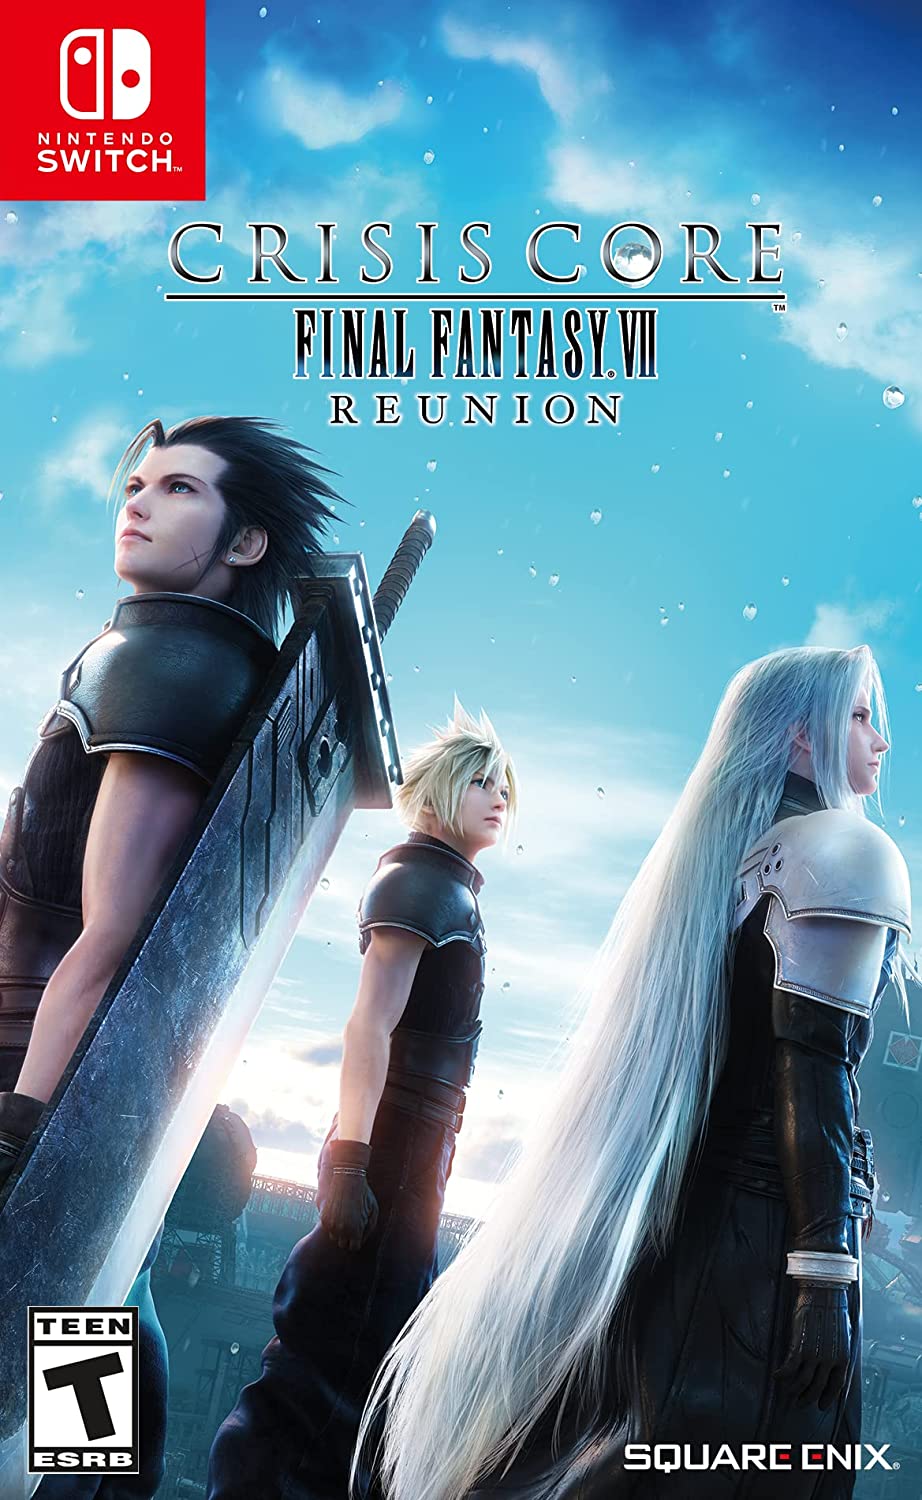 Crisis Core - Final Fantasy VII - Reunion - Nintendo Switch R1 - US - Bstorekw